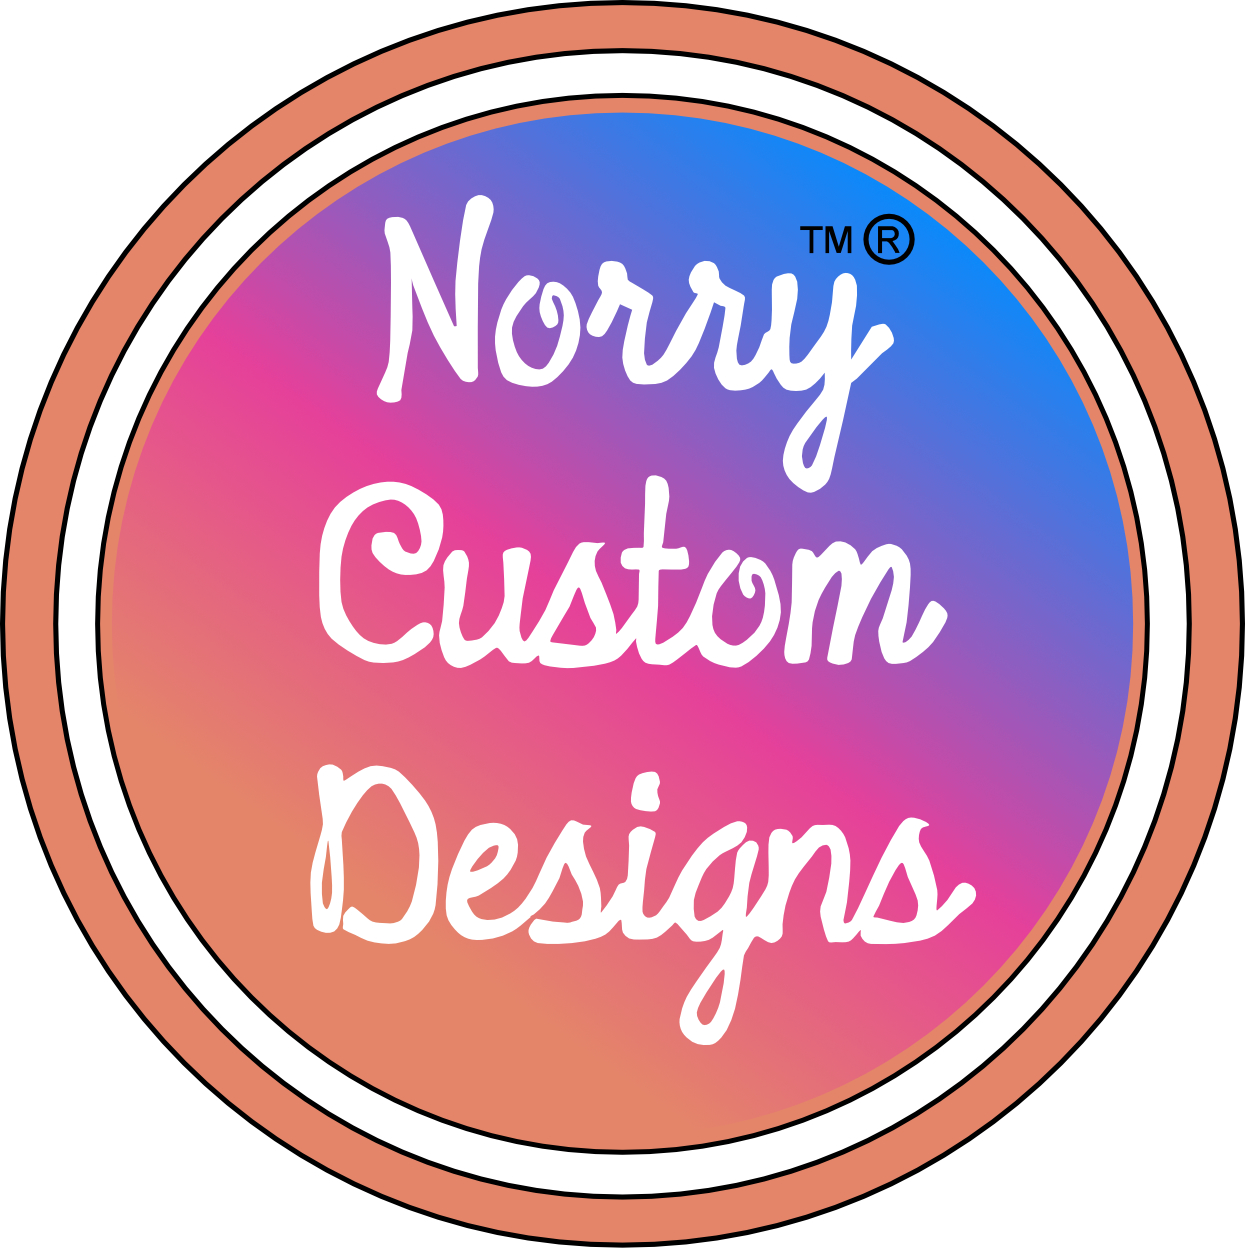 Norry Custom Designs